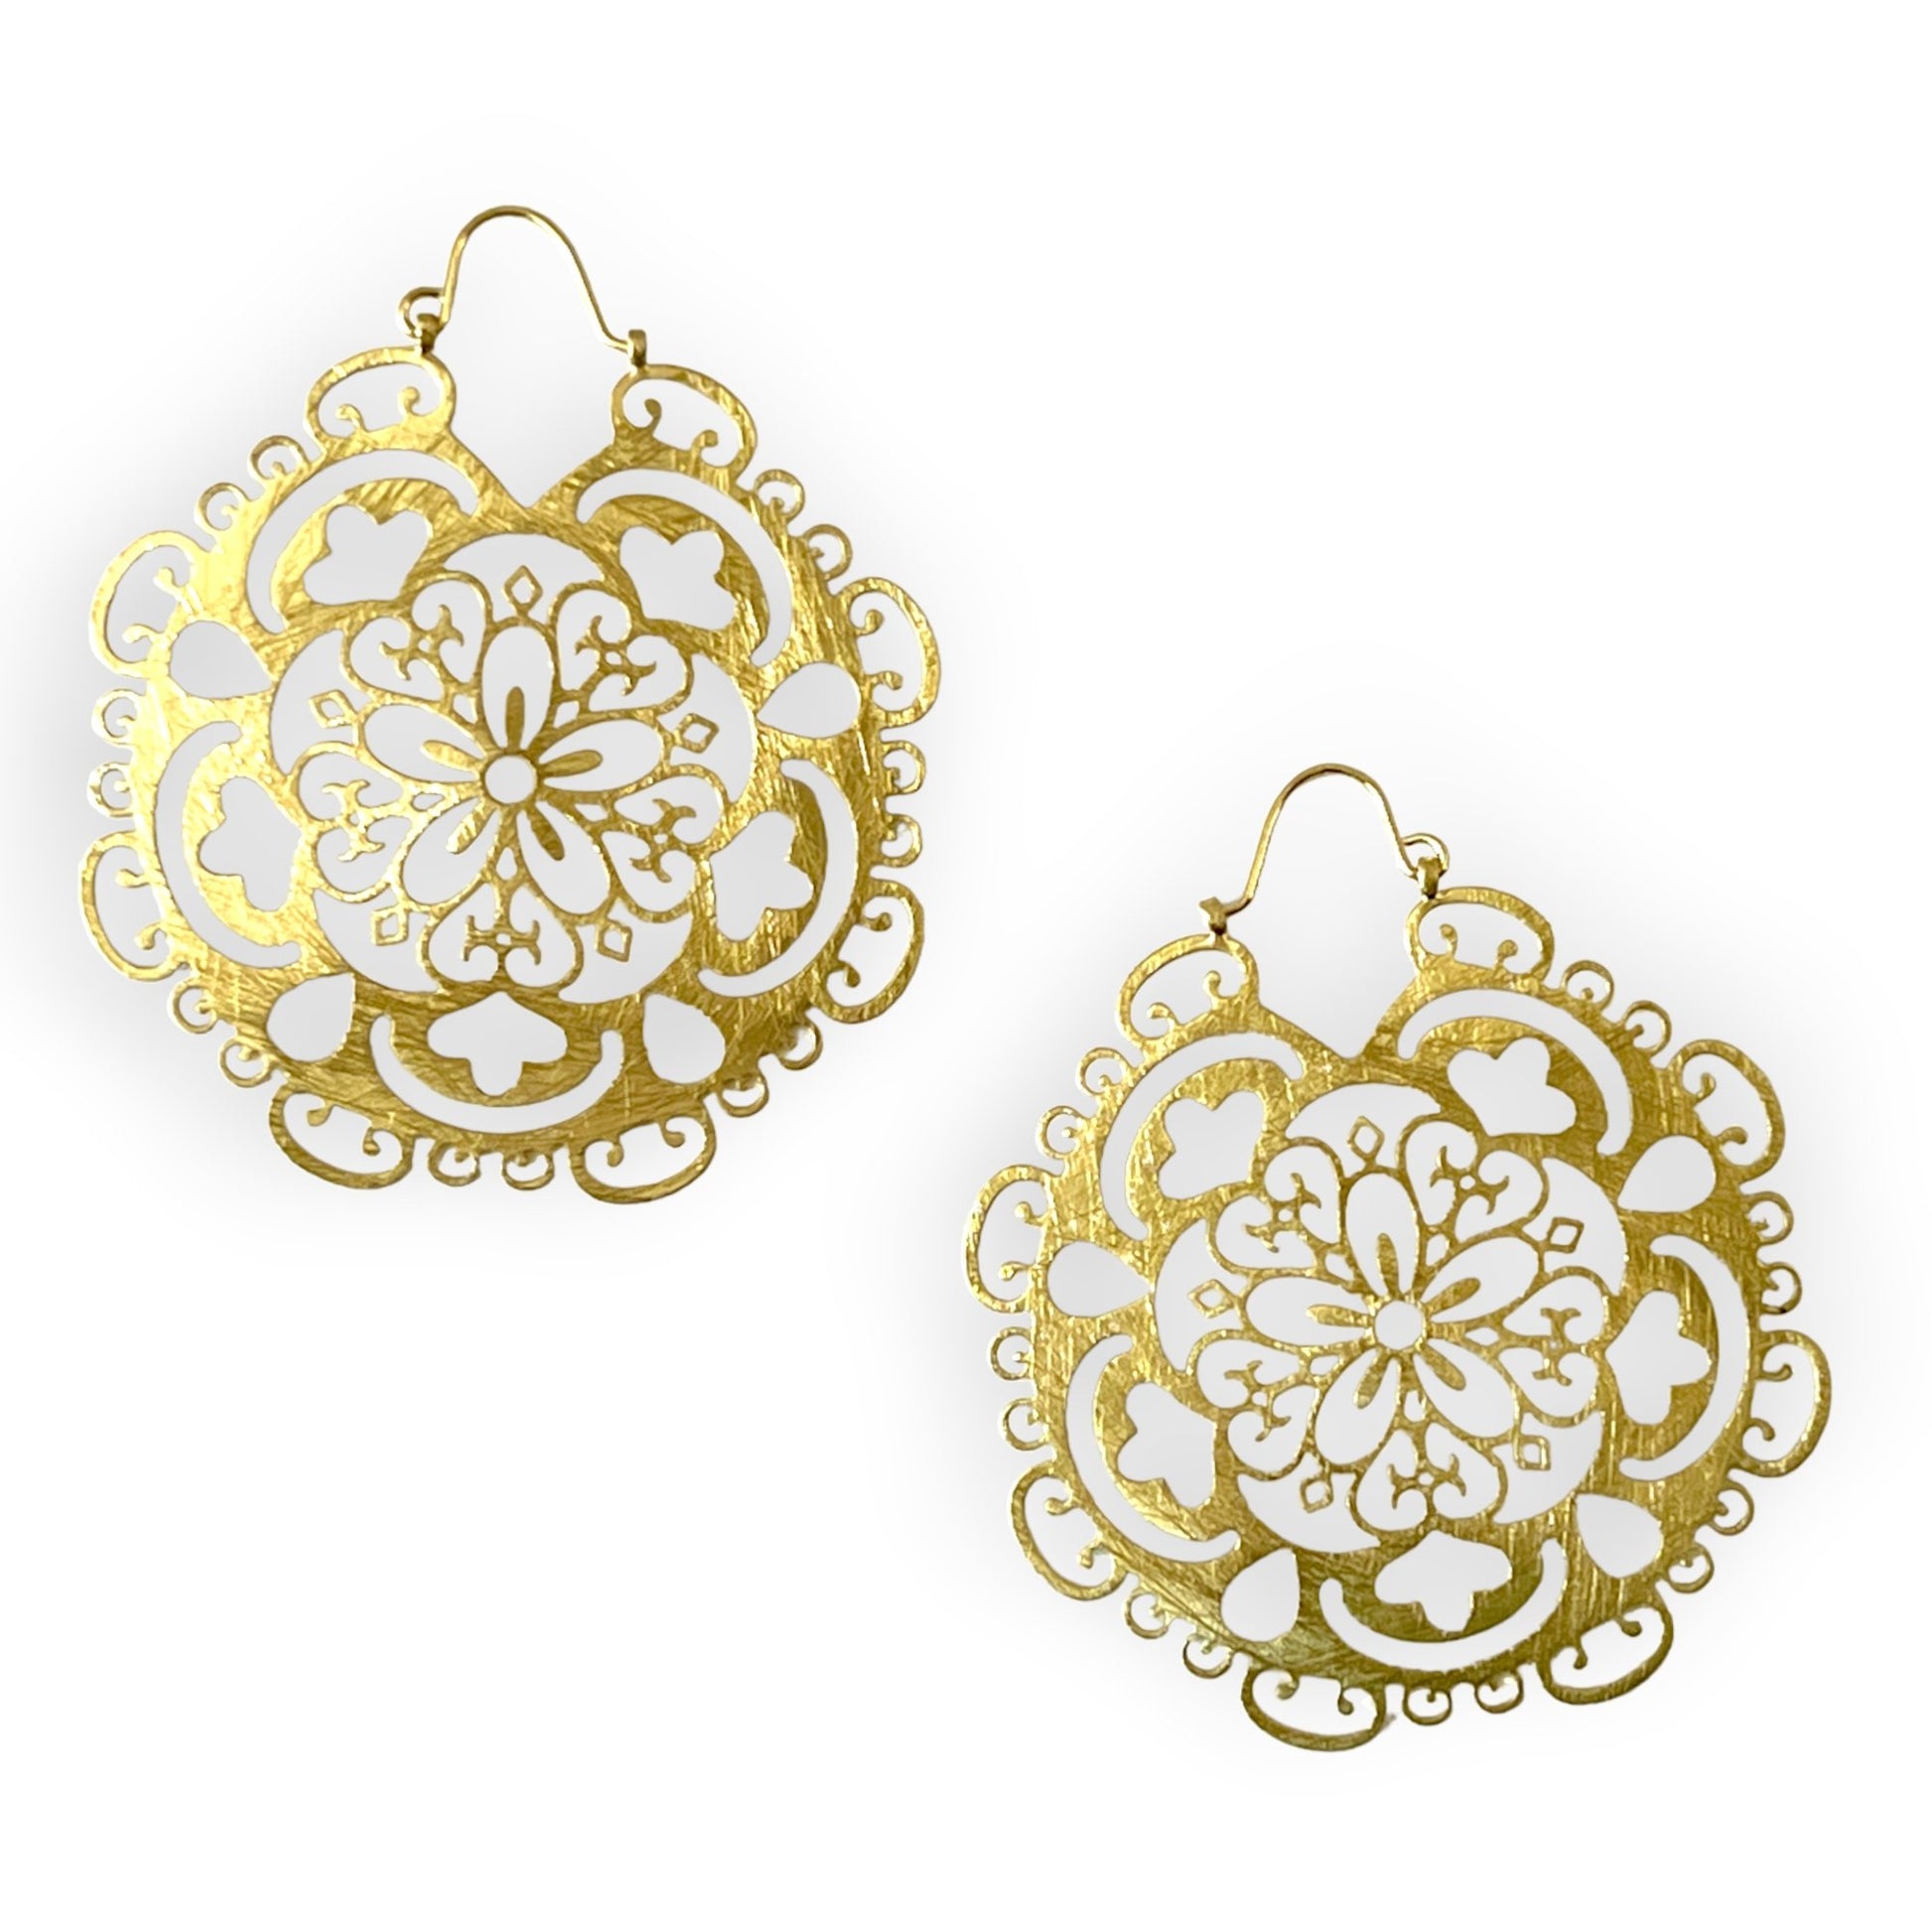 Floral filigree inspired dangling statement earringsSundara Joon